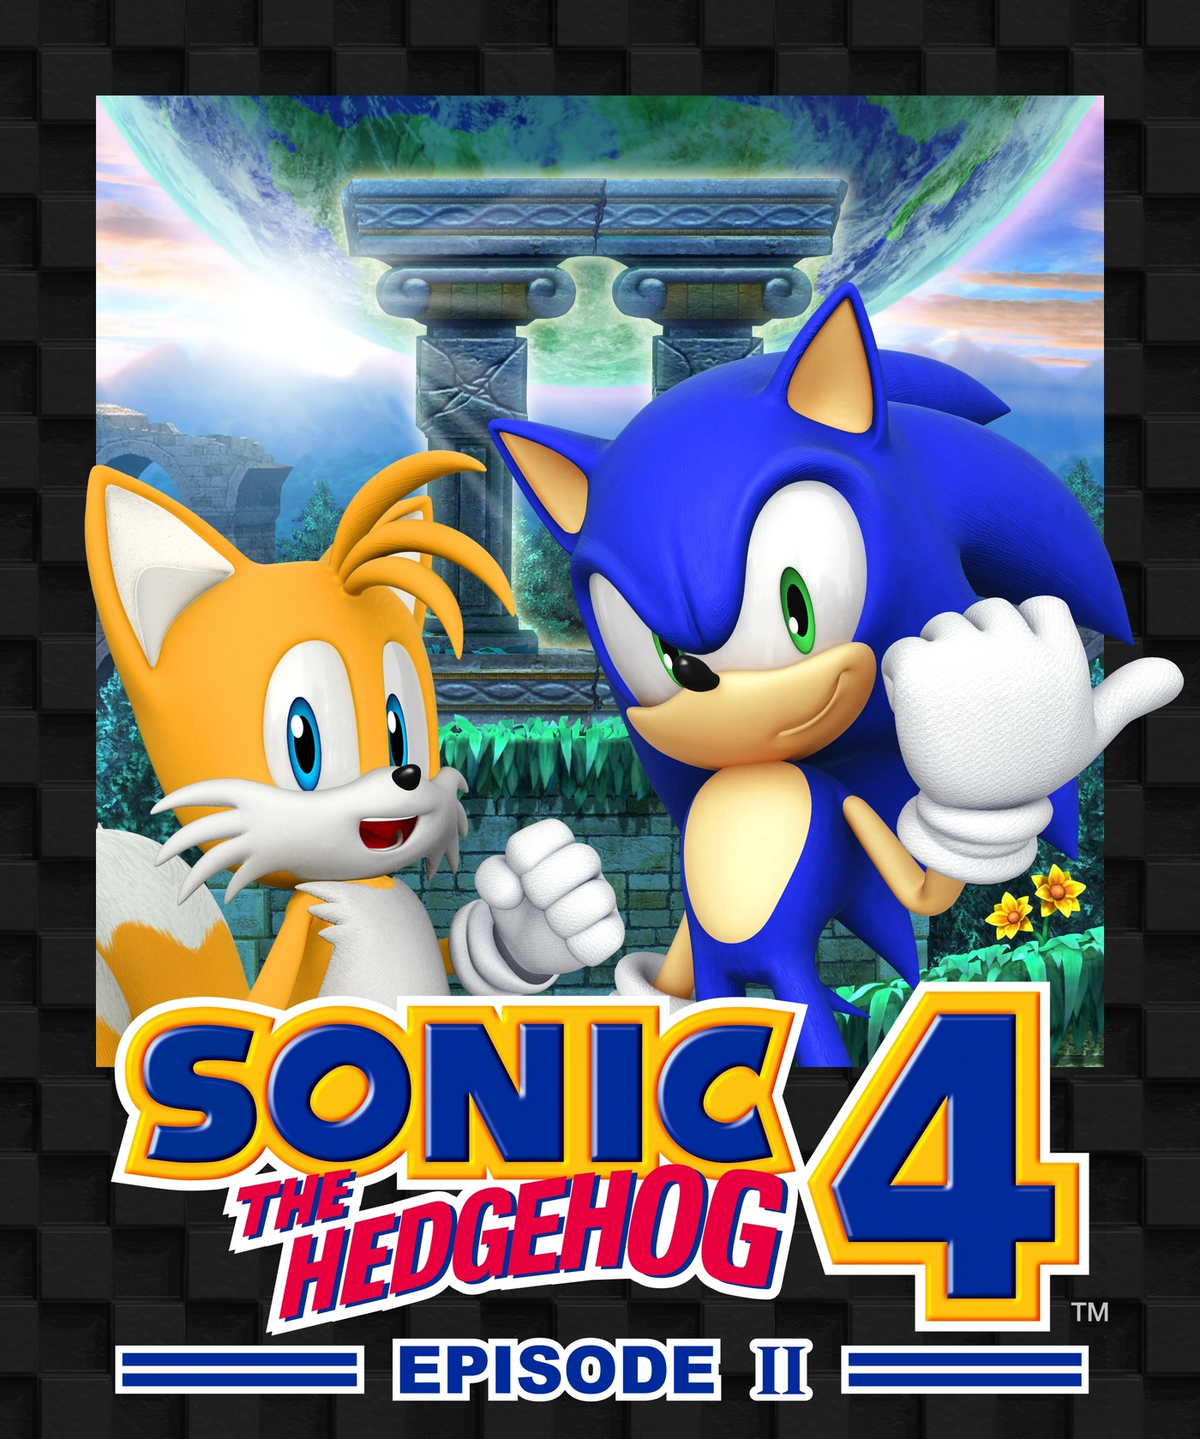 Sonic the hedgehog 4 2. Sonic the Hedgehog 4 Episode II обложка. Игра Sonic 4. Игра Sonic the Hedgehog 4 Episode 2. Sonic the Hedgehog 4: Episode i обложка.